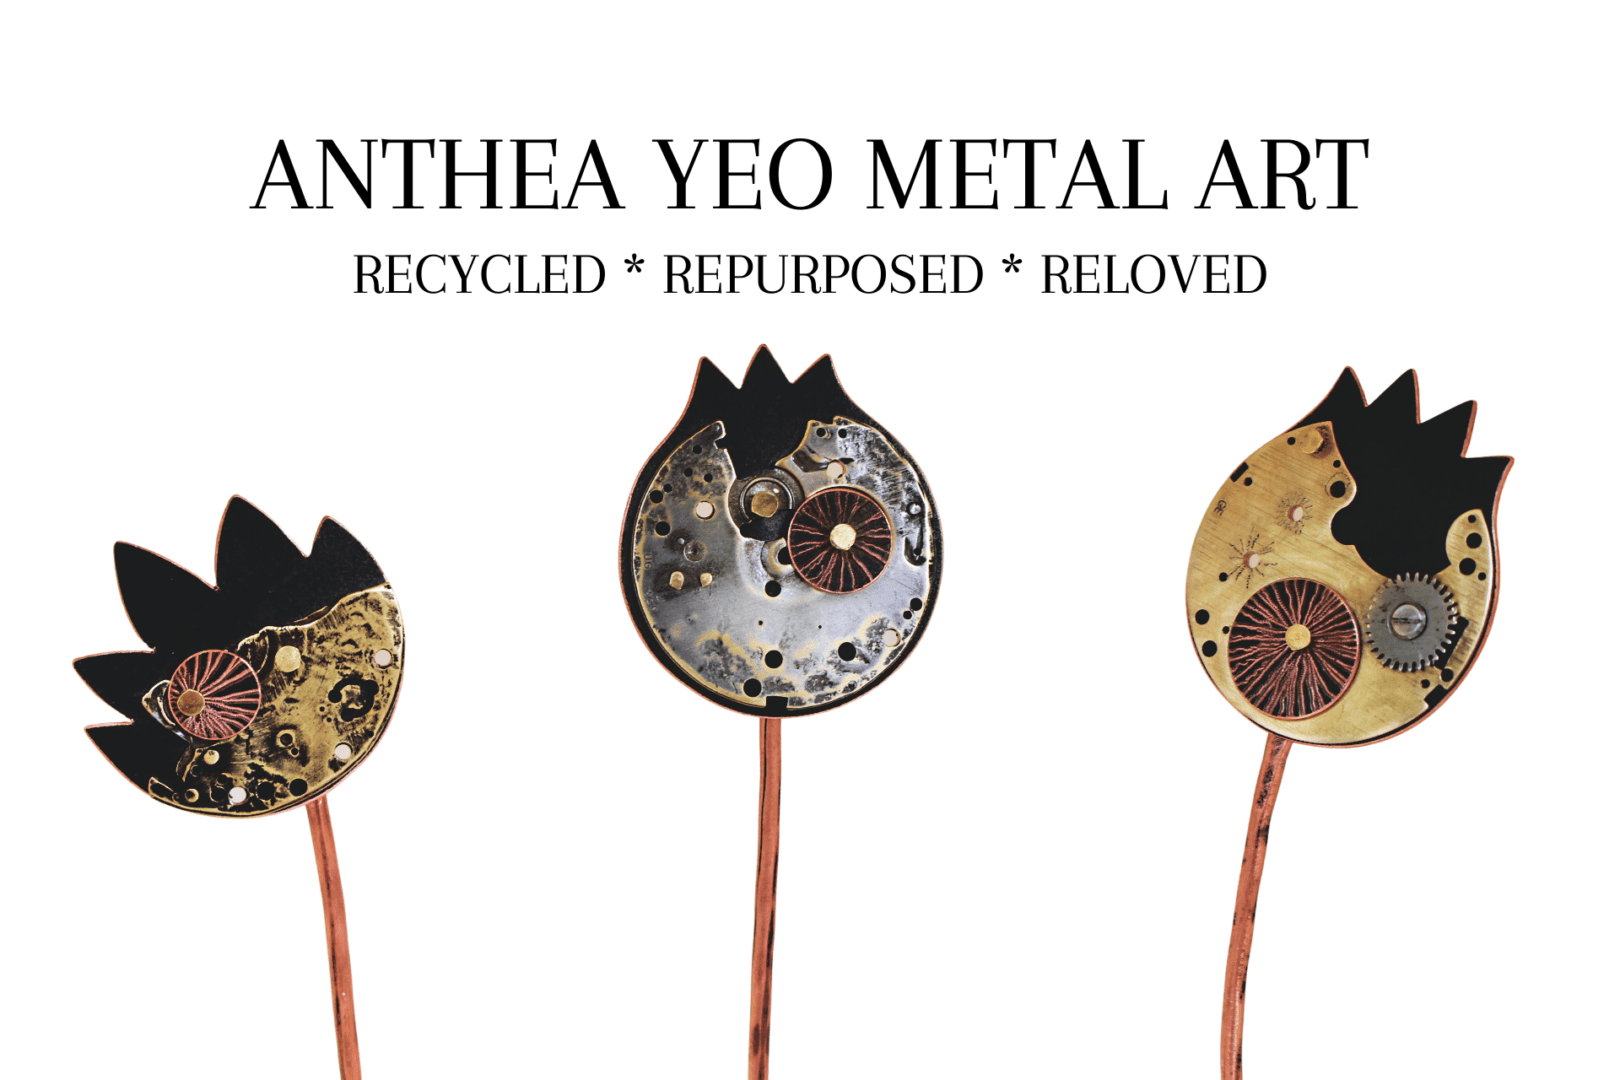 Anthea Yeo Metal Art